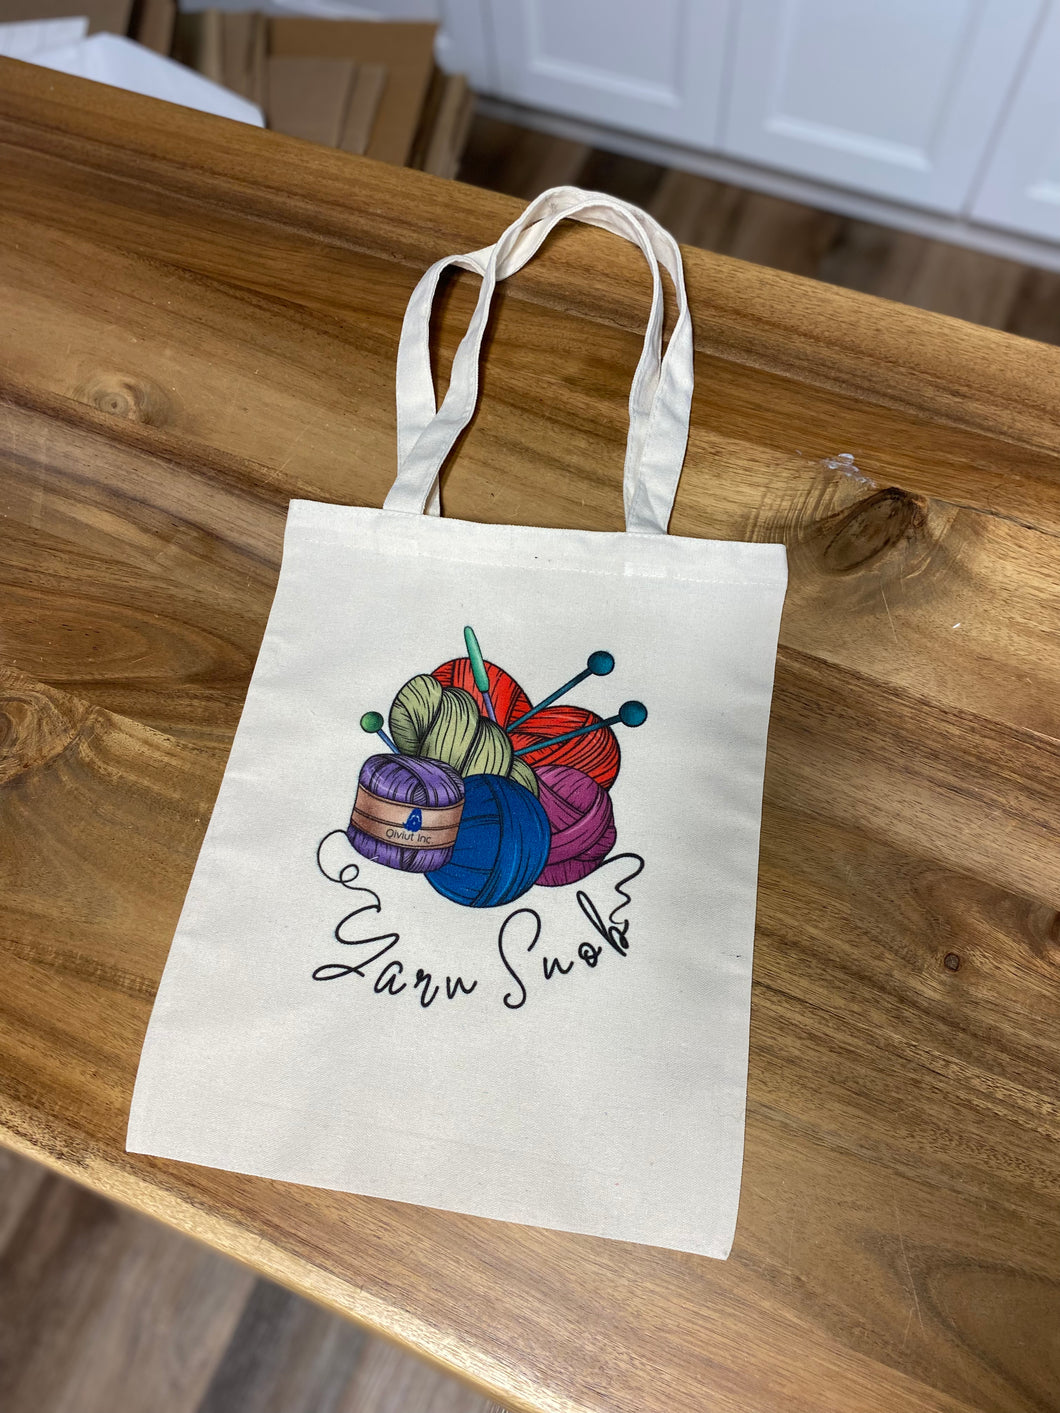 Yarn Snob Tote Bag